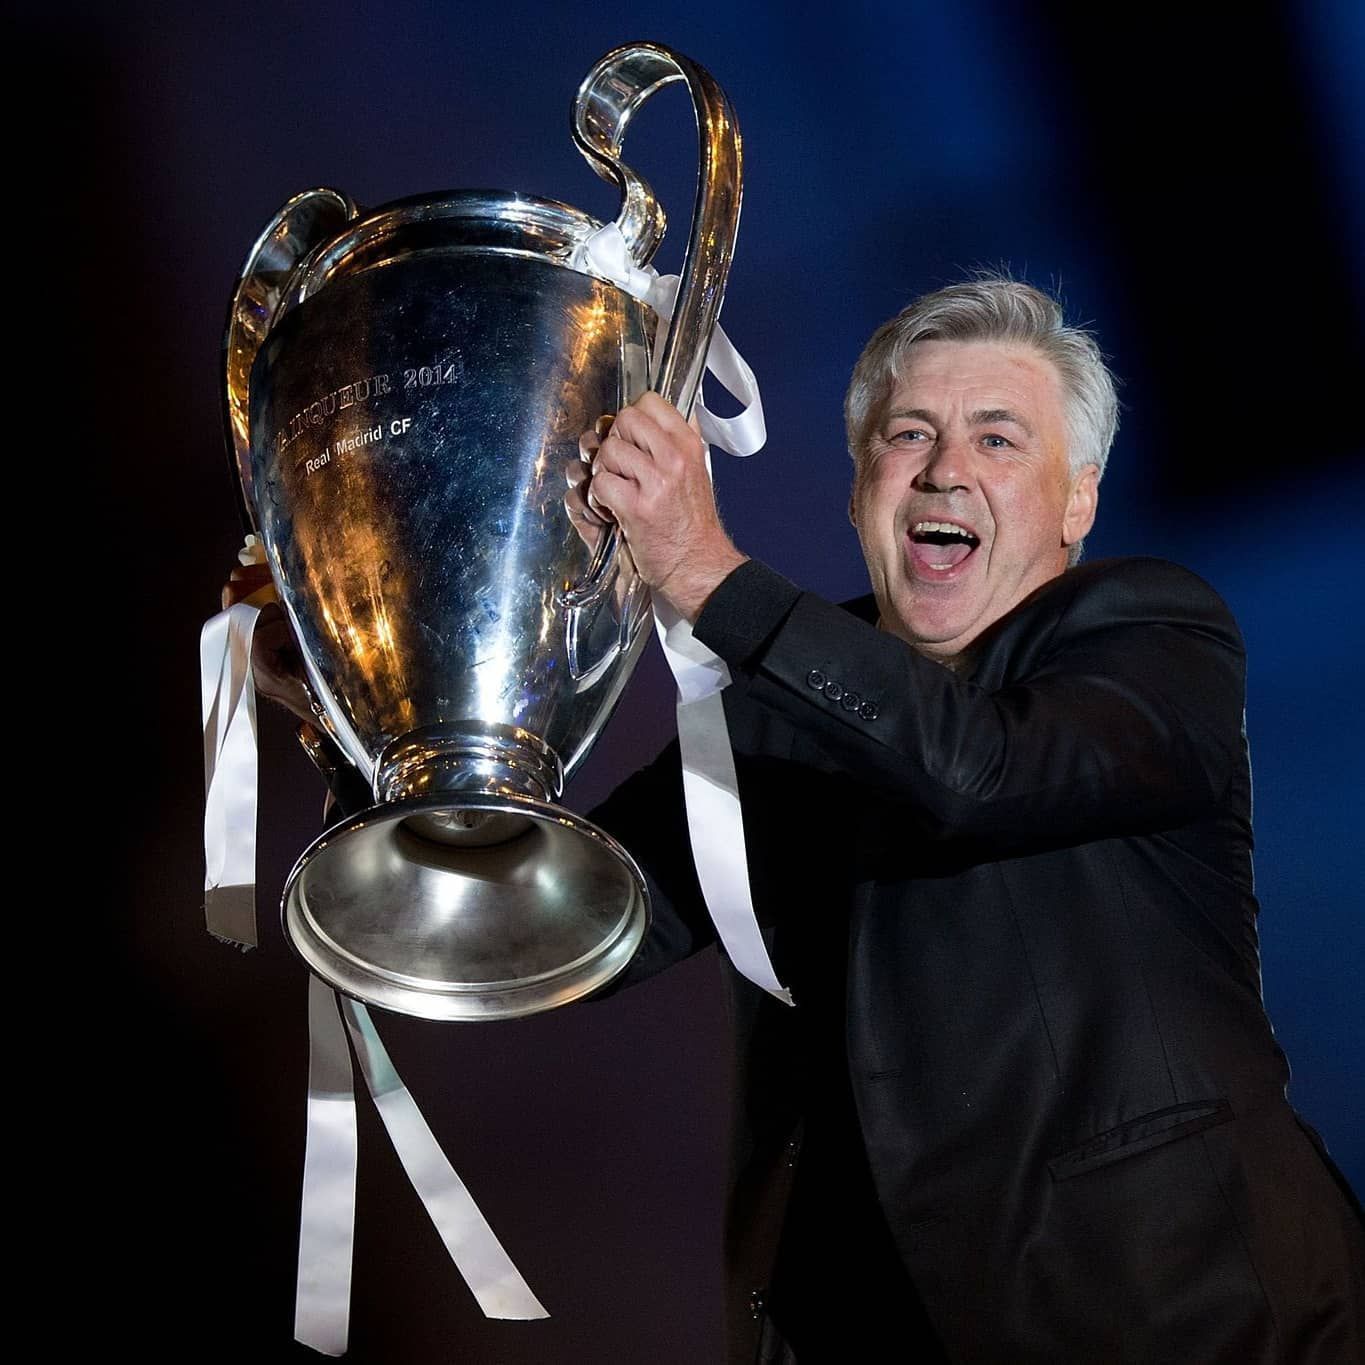 Happy birthday to Carlo Ancelotti who celebrates his 62nd birthday today.   